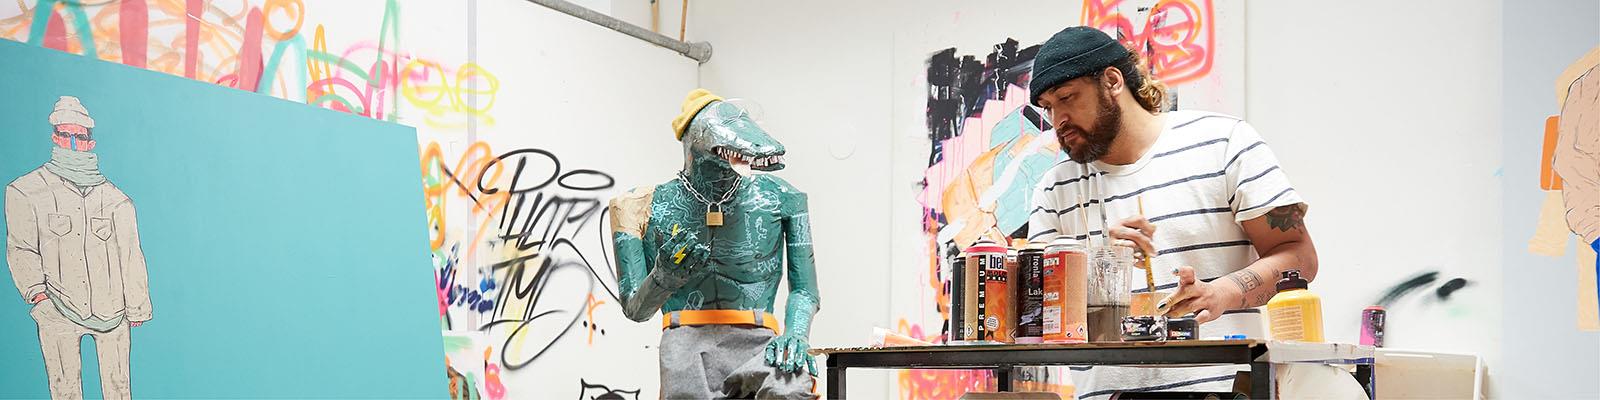 Contemporary art student working in studio